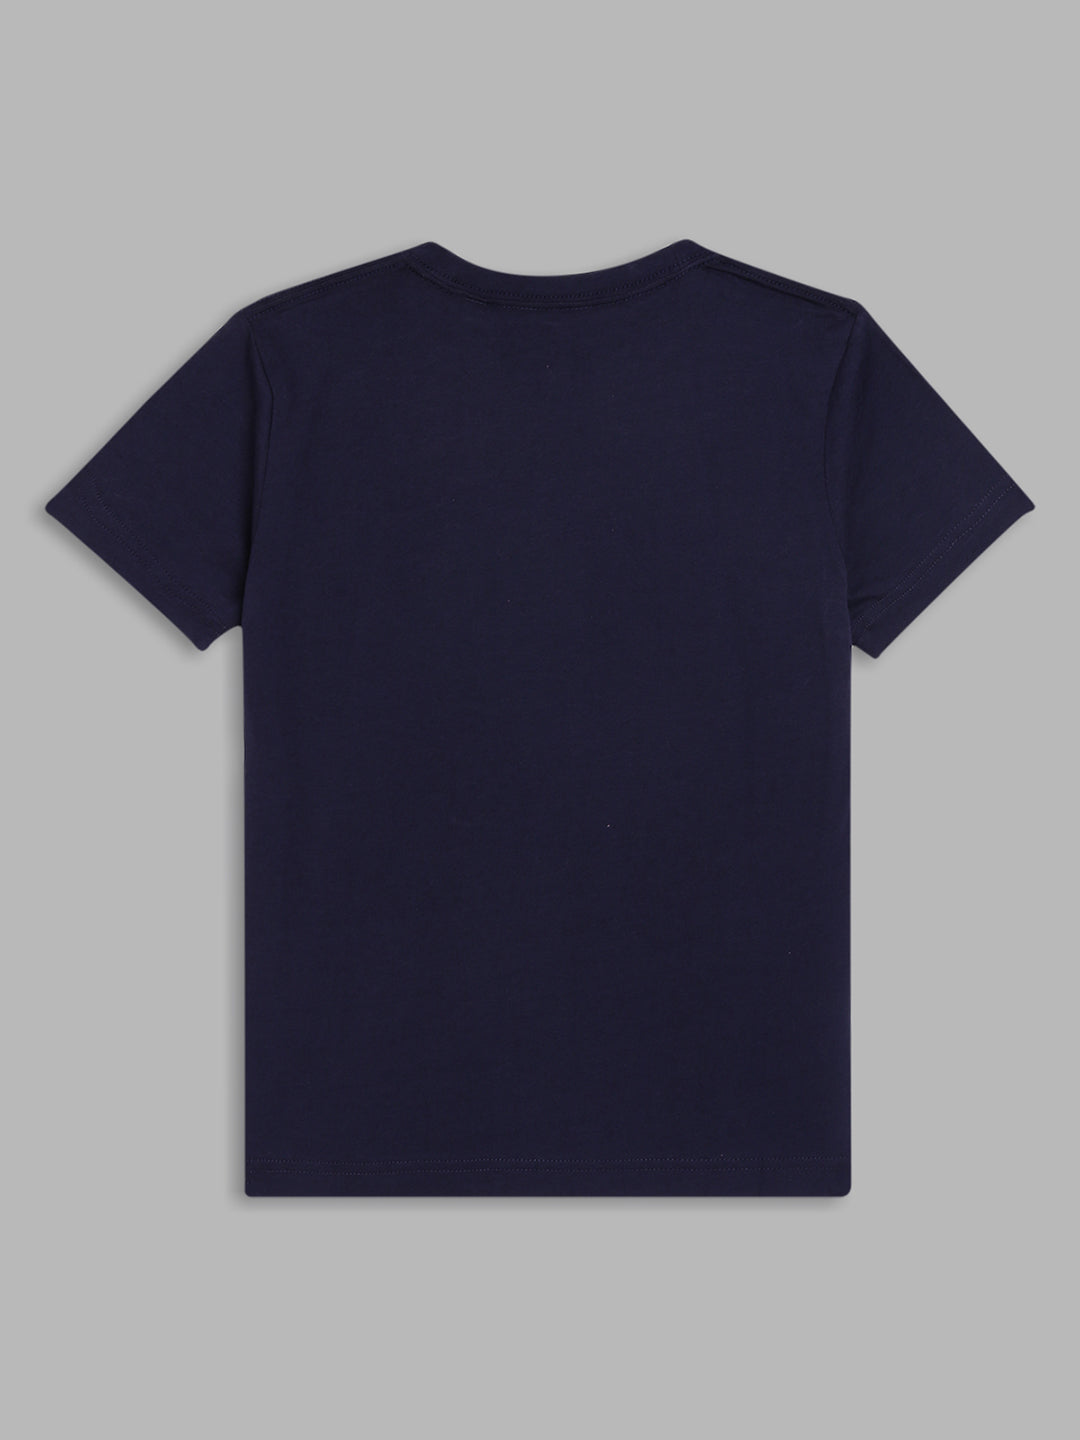 Gant Boys Navy Blue Brand Logo Printed Cotton T-shirt